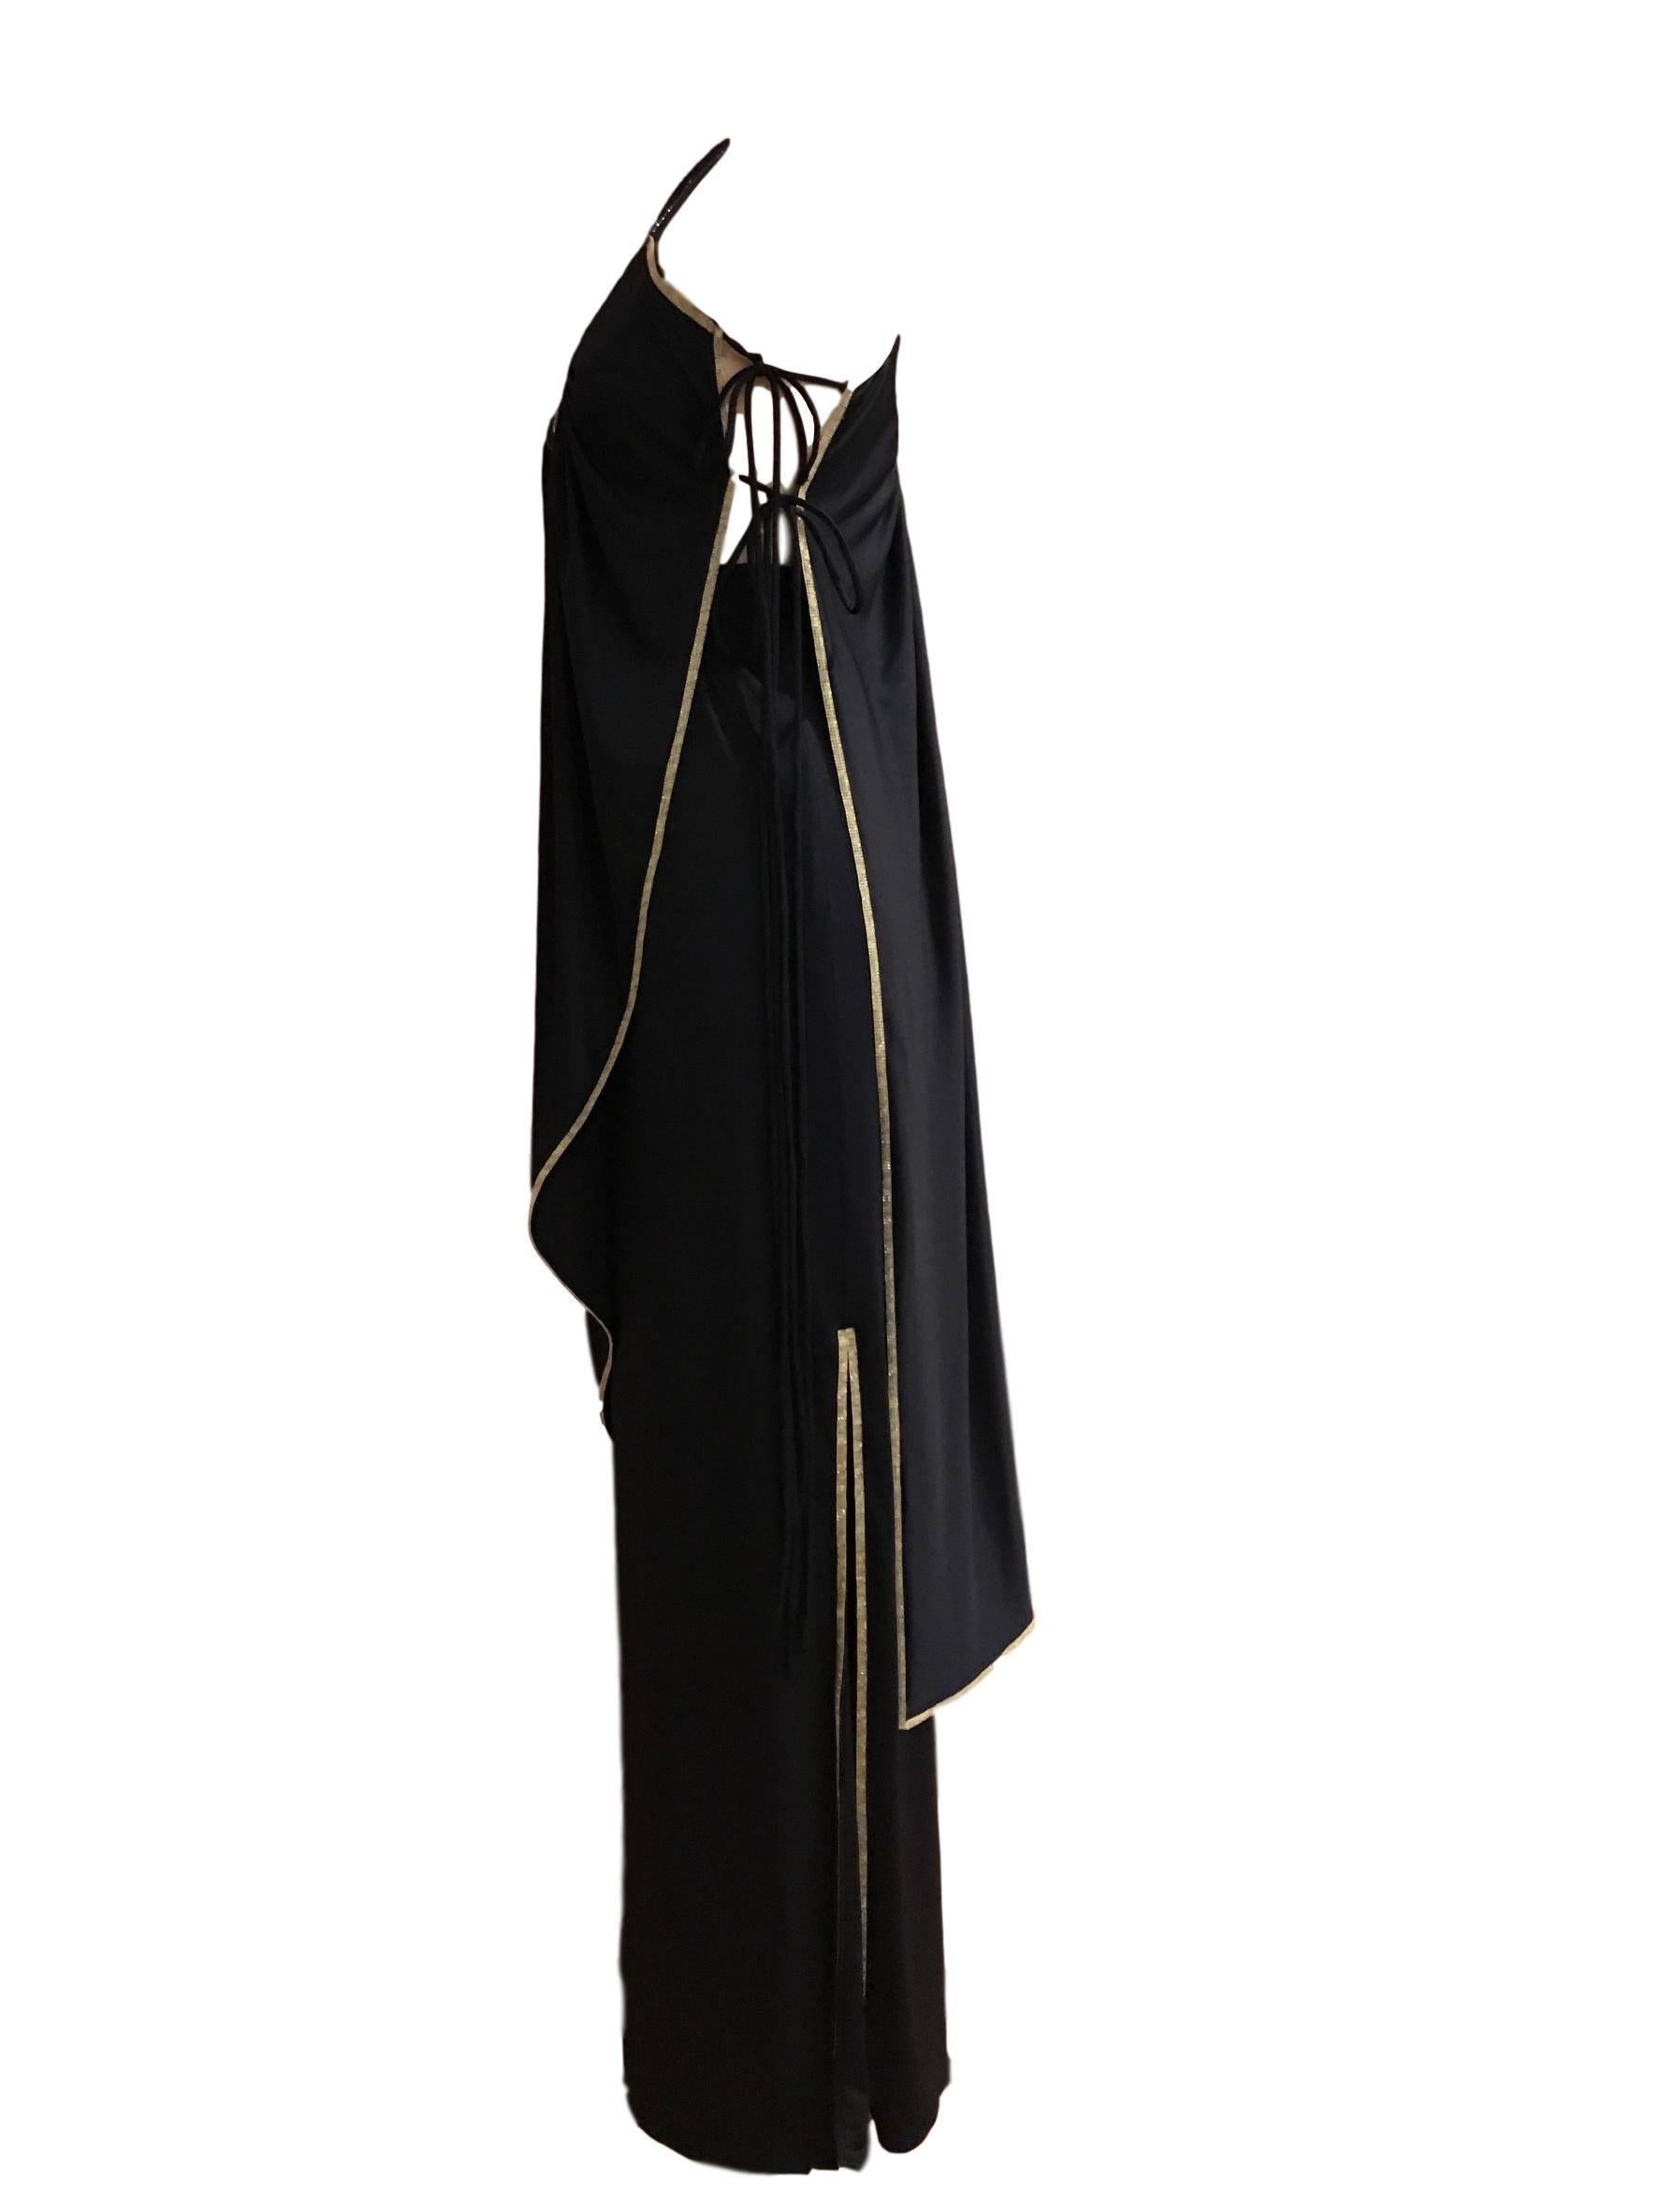 Black Bill Gibb Jersey Crepe Toga 2 Piece Dress Beaded Ensemble 1970s For Sale